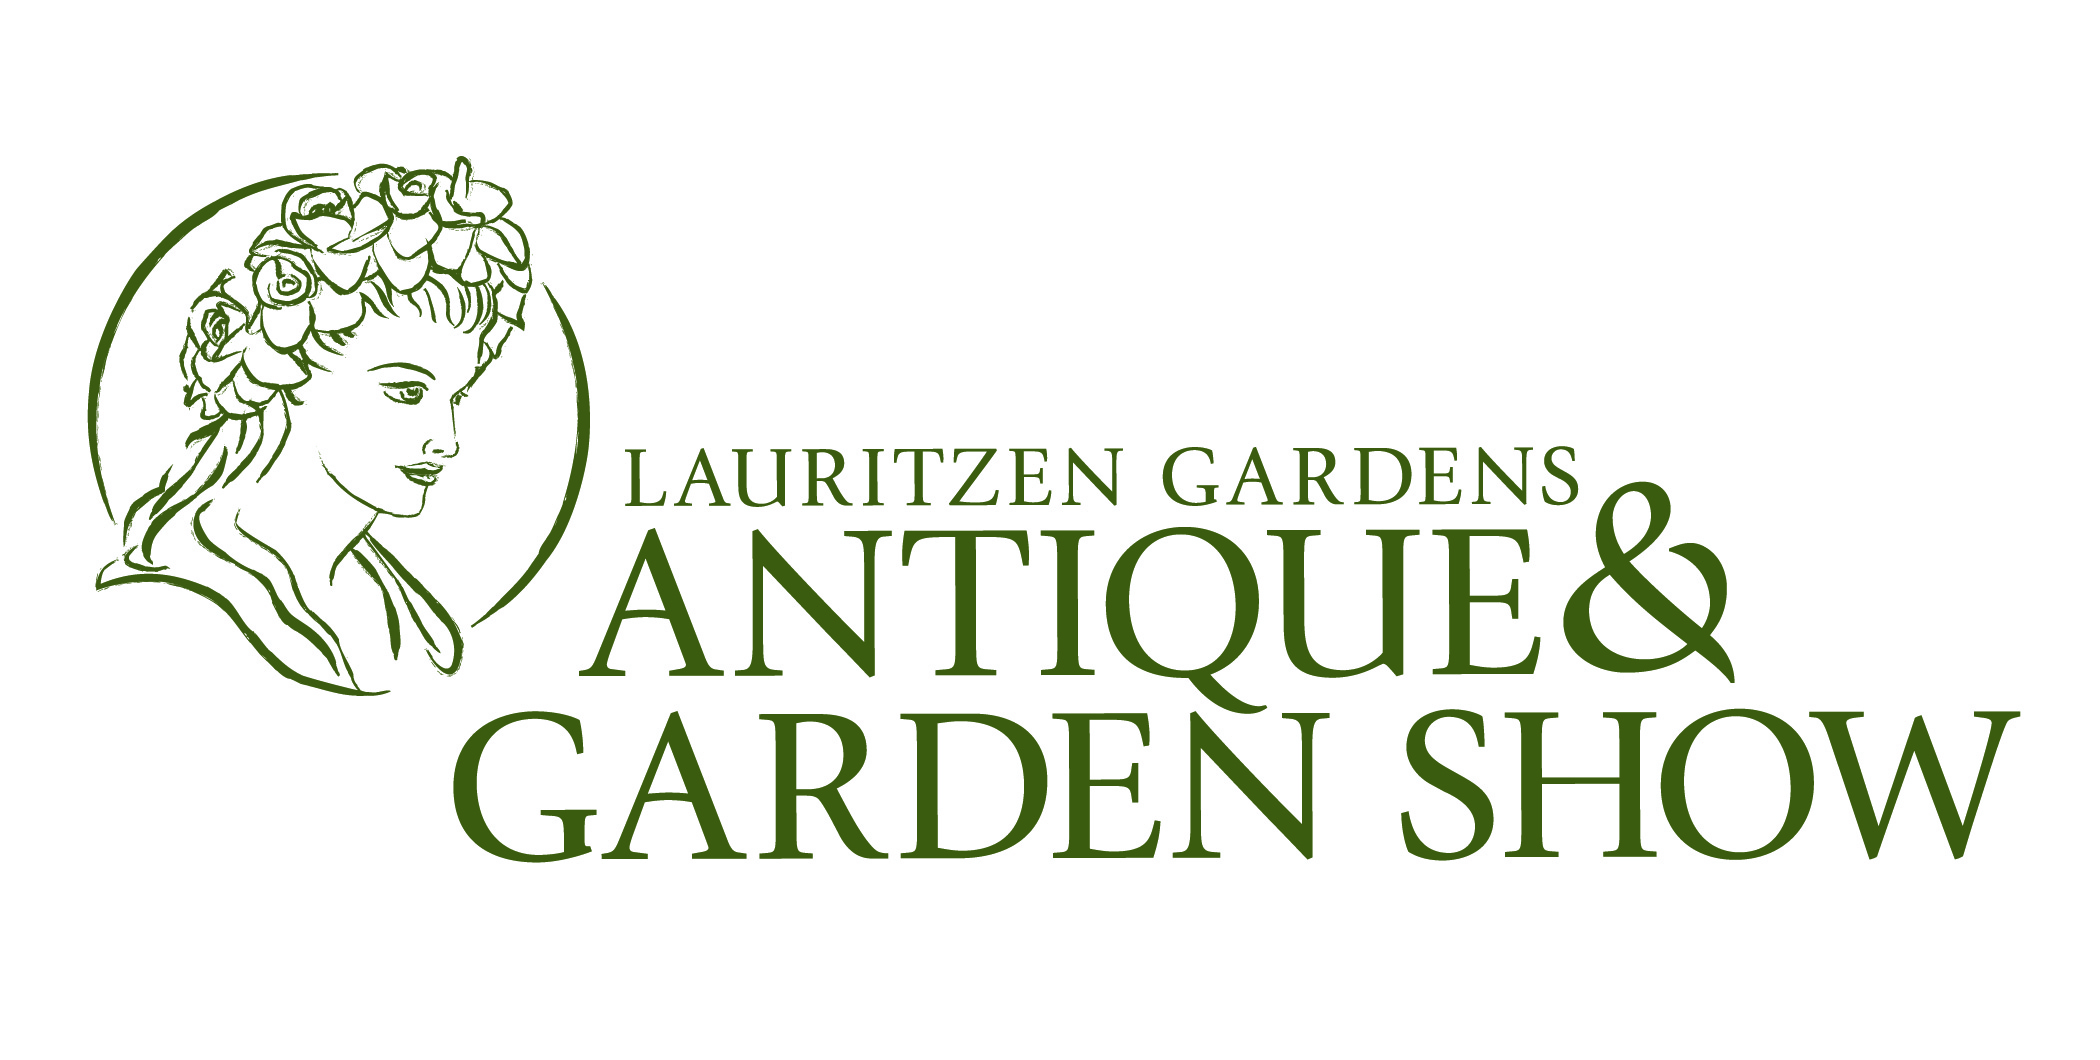 Lauritzen Gardens Antique and Garden Show